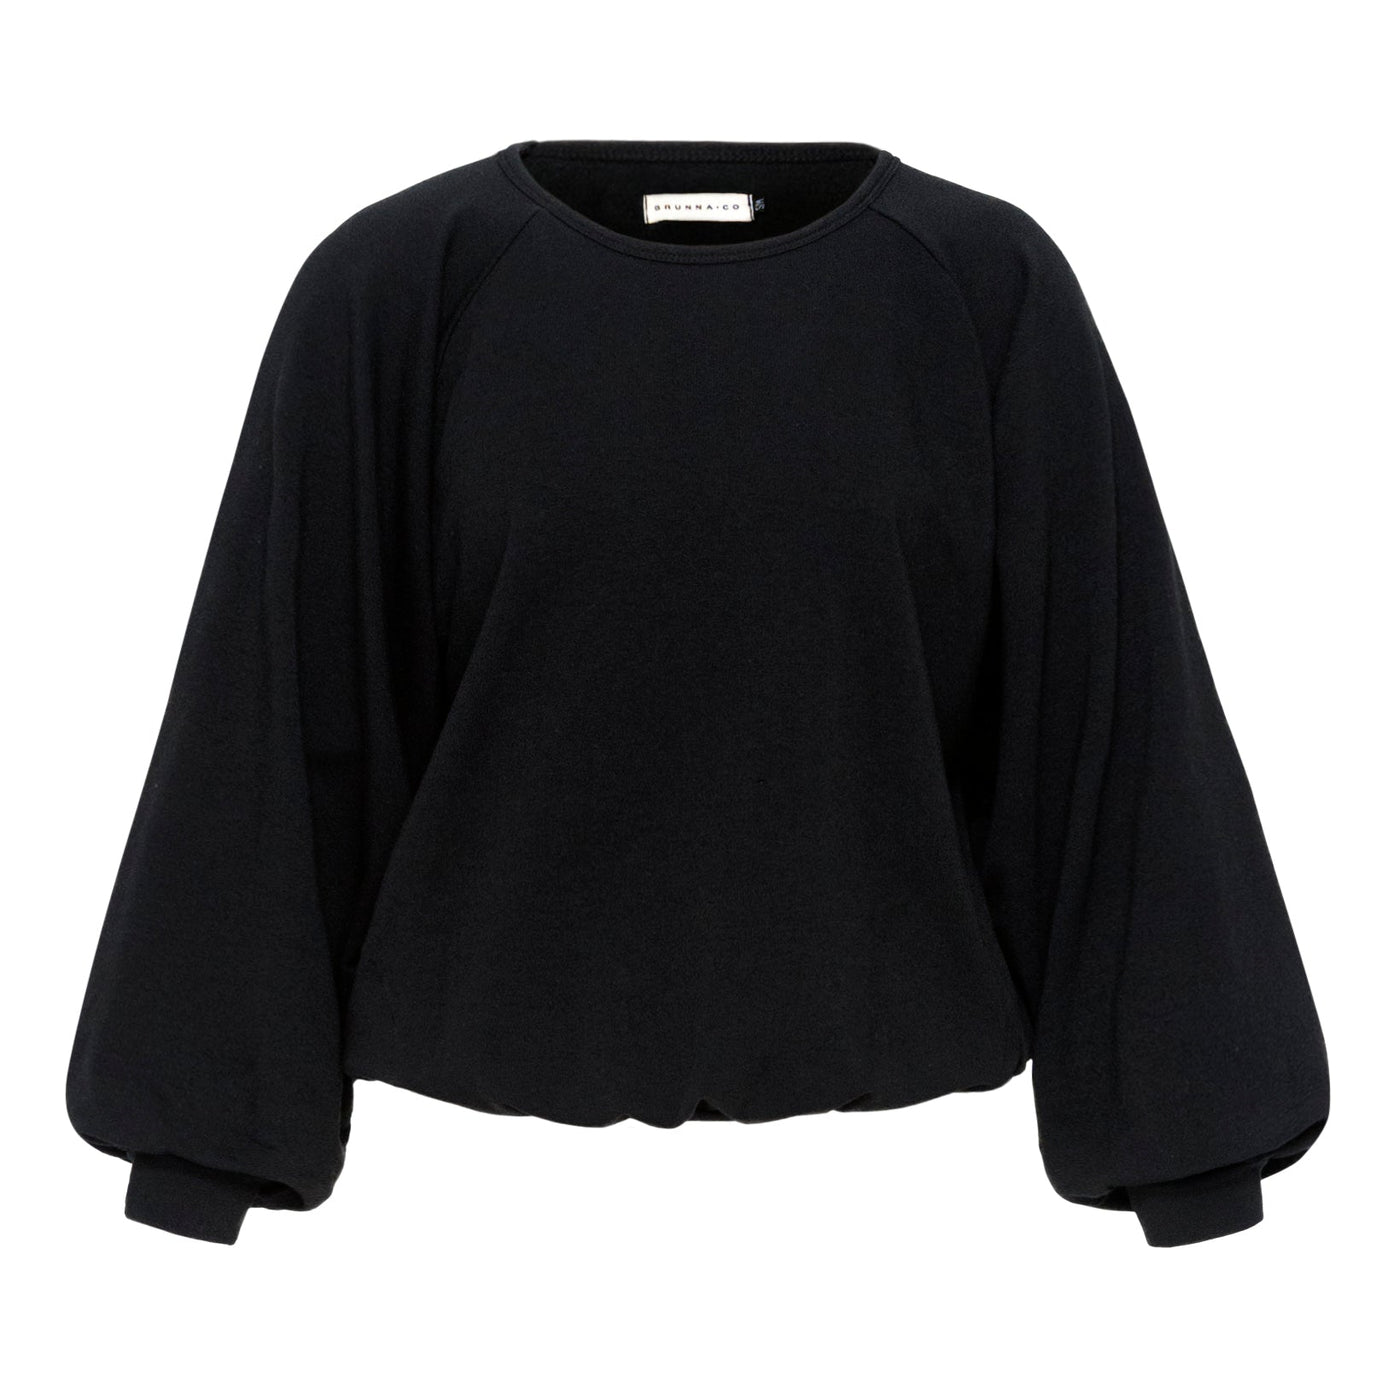 Haley Bamboo Fleece Sweaters, in Black by BrunnaCo